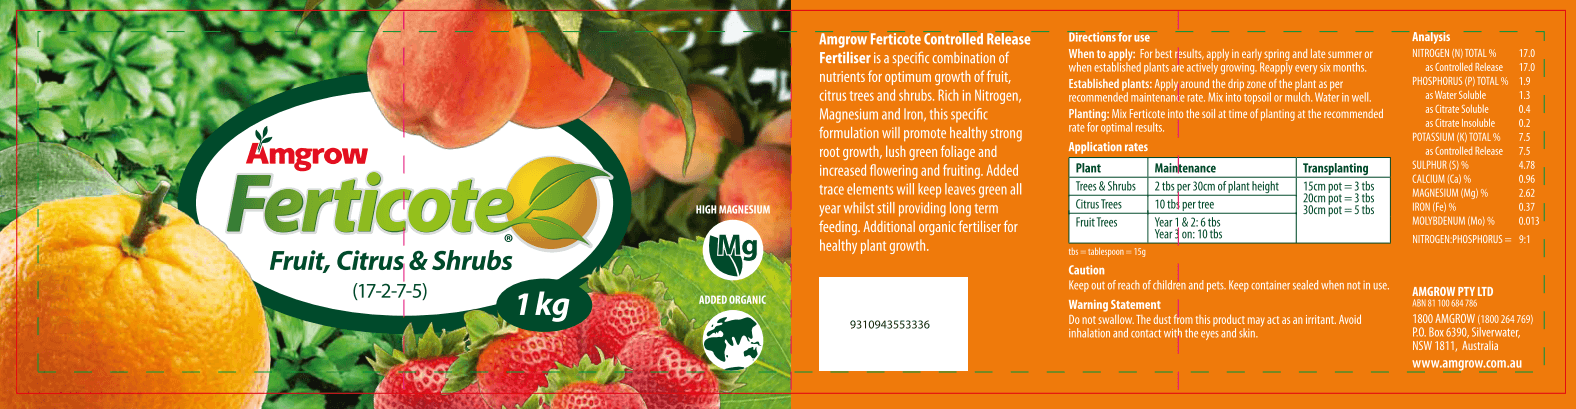 Amgrow Ferticote Fruit Citrus & Shrub Tub - Slow Release Fertiliser